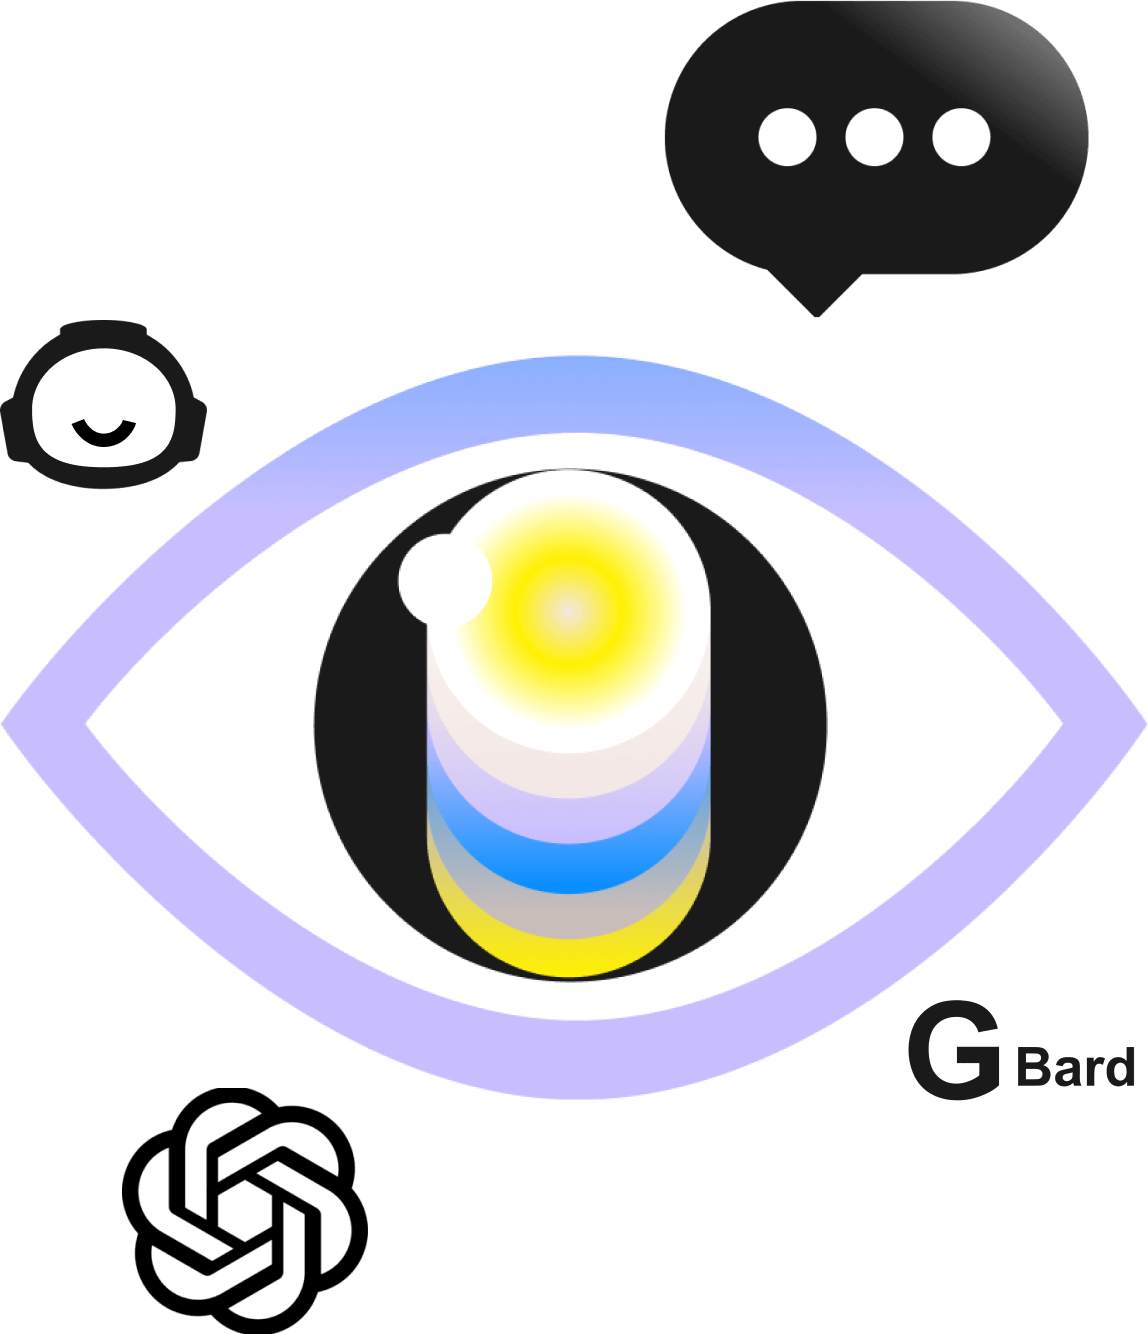 Illustration of AI chatbot logos